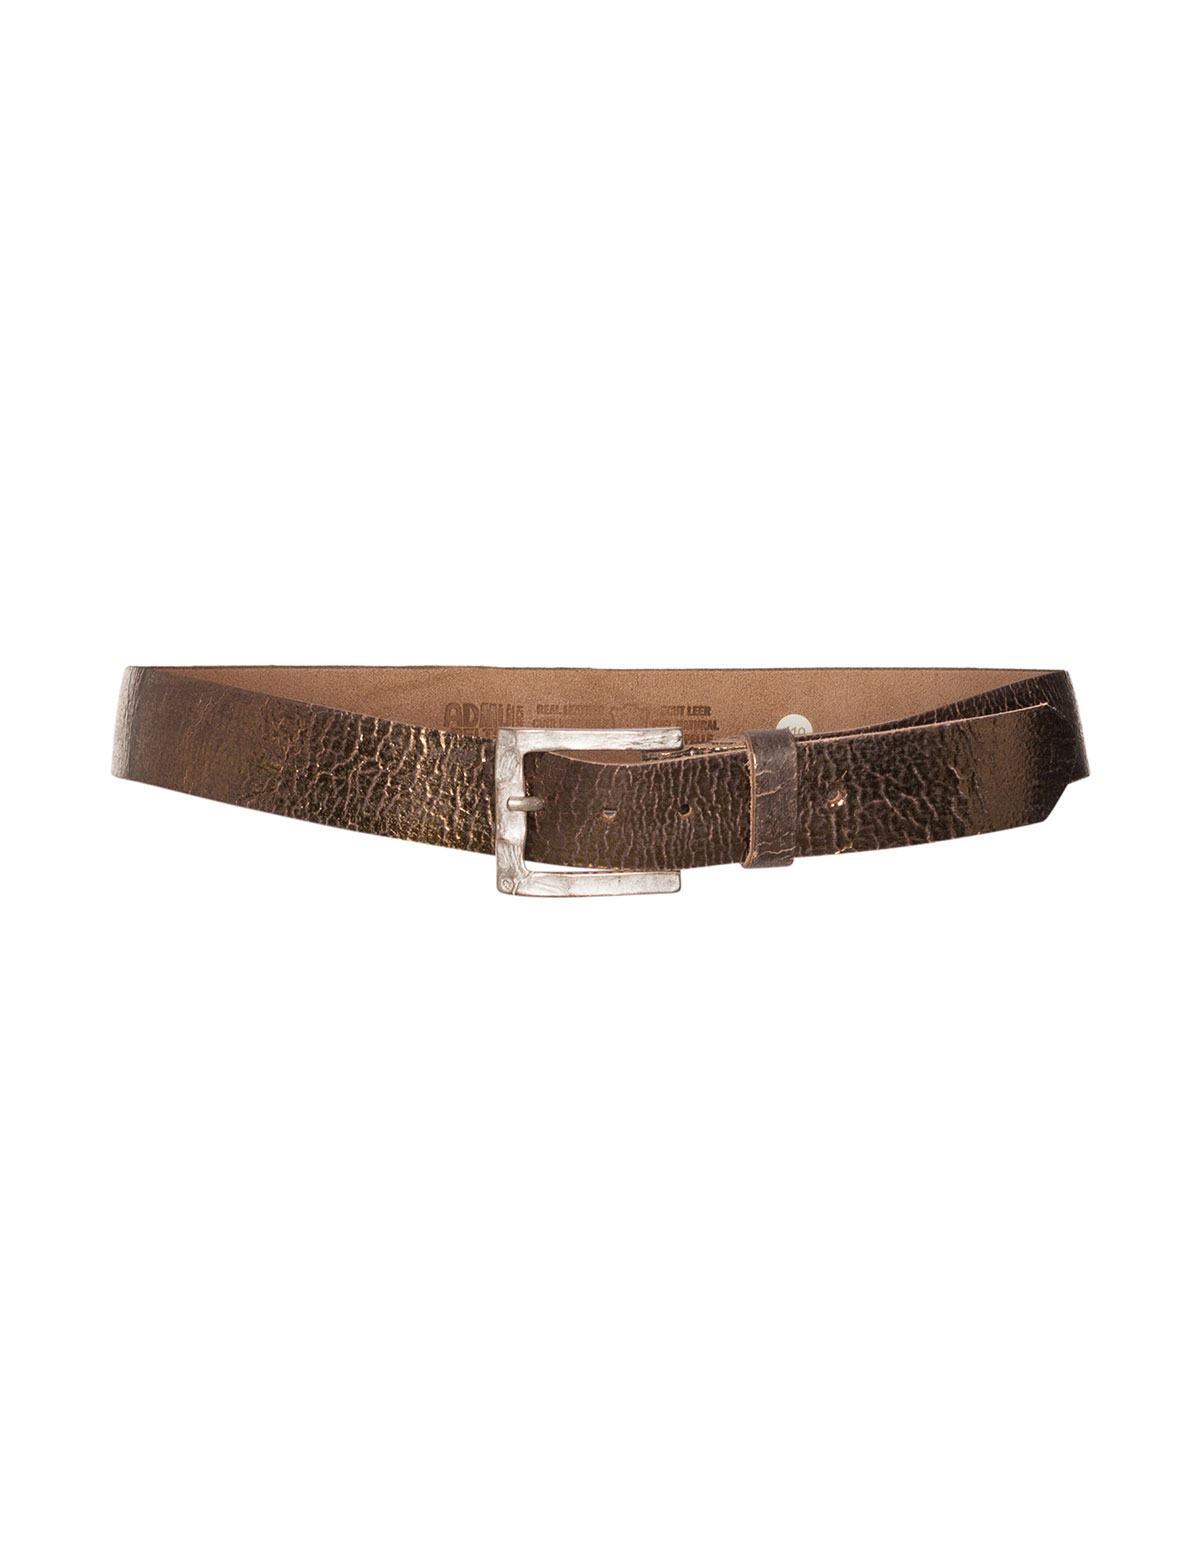 Metallic leather belt  by
ADMÜ